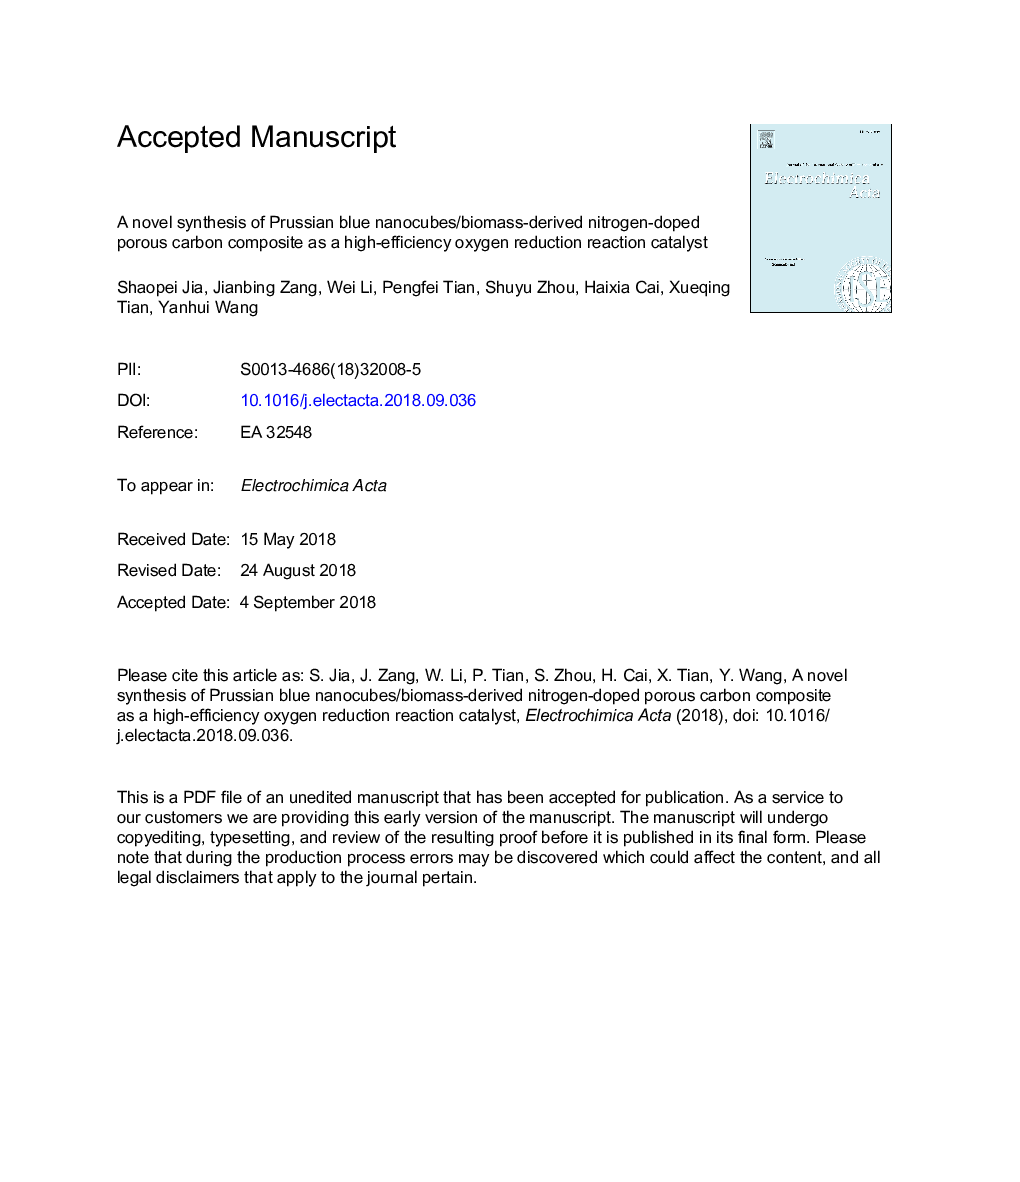 A novel synthesis of Prussian blue nanocubes/biomass-derived nitrogen-doped porous carbon composite as a high-efficiency oxygen reduction reaction catalyst